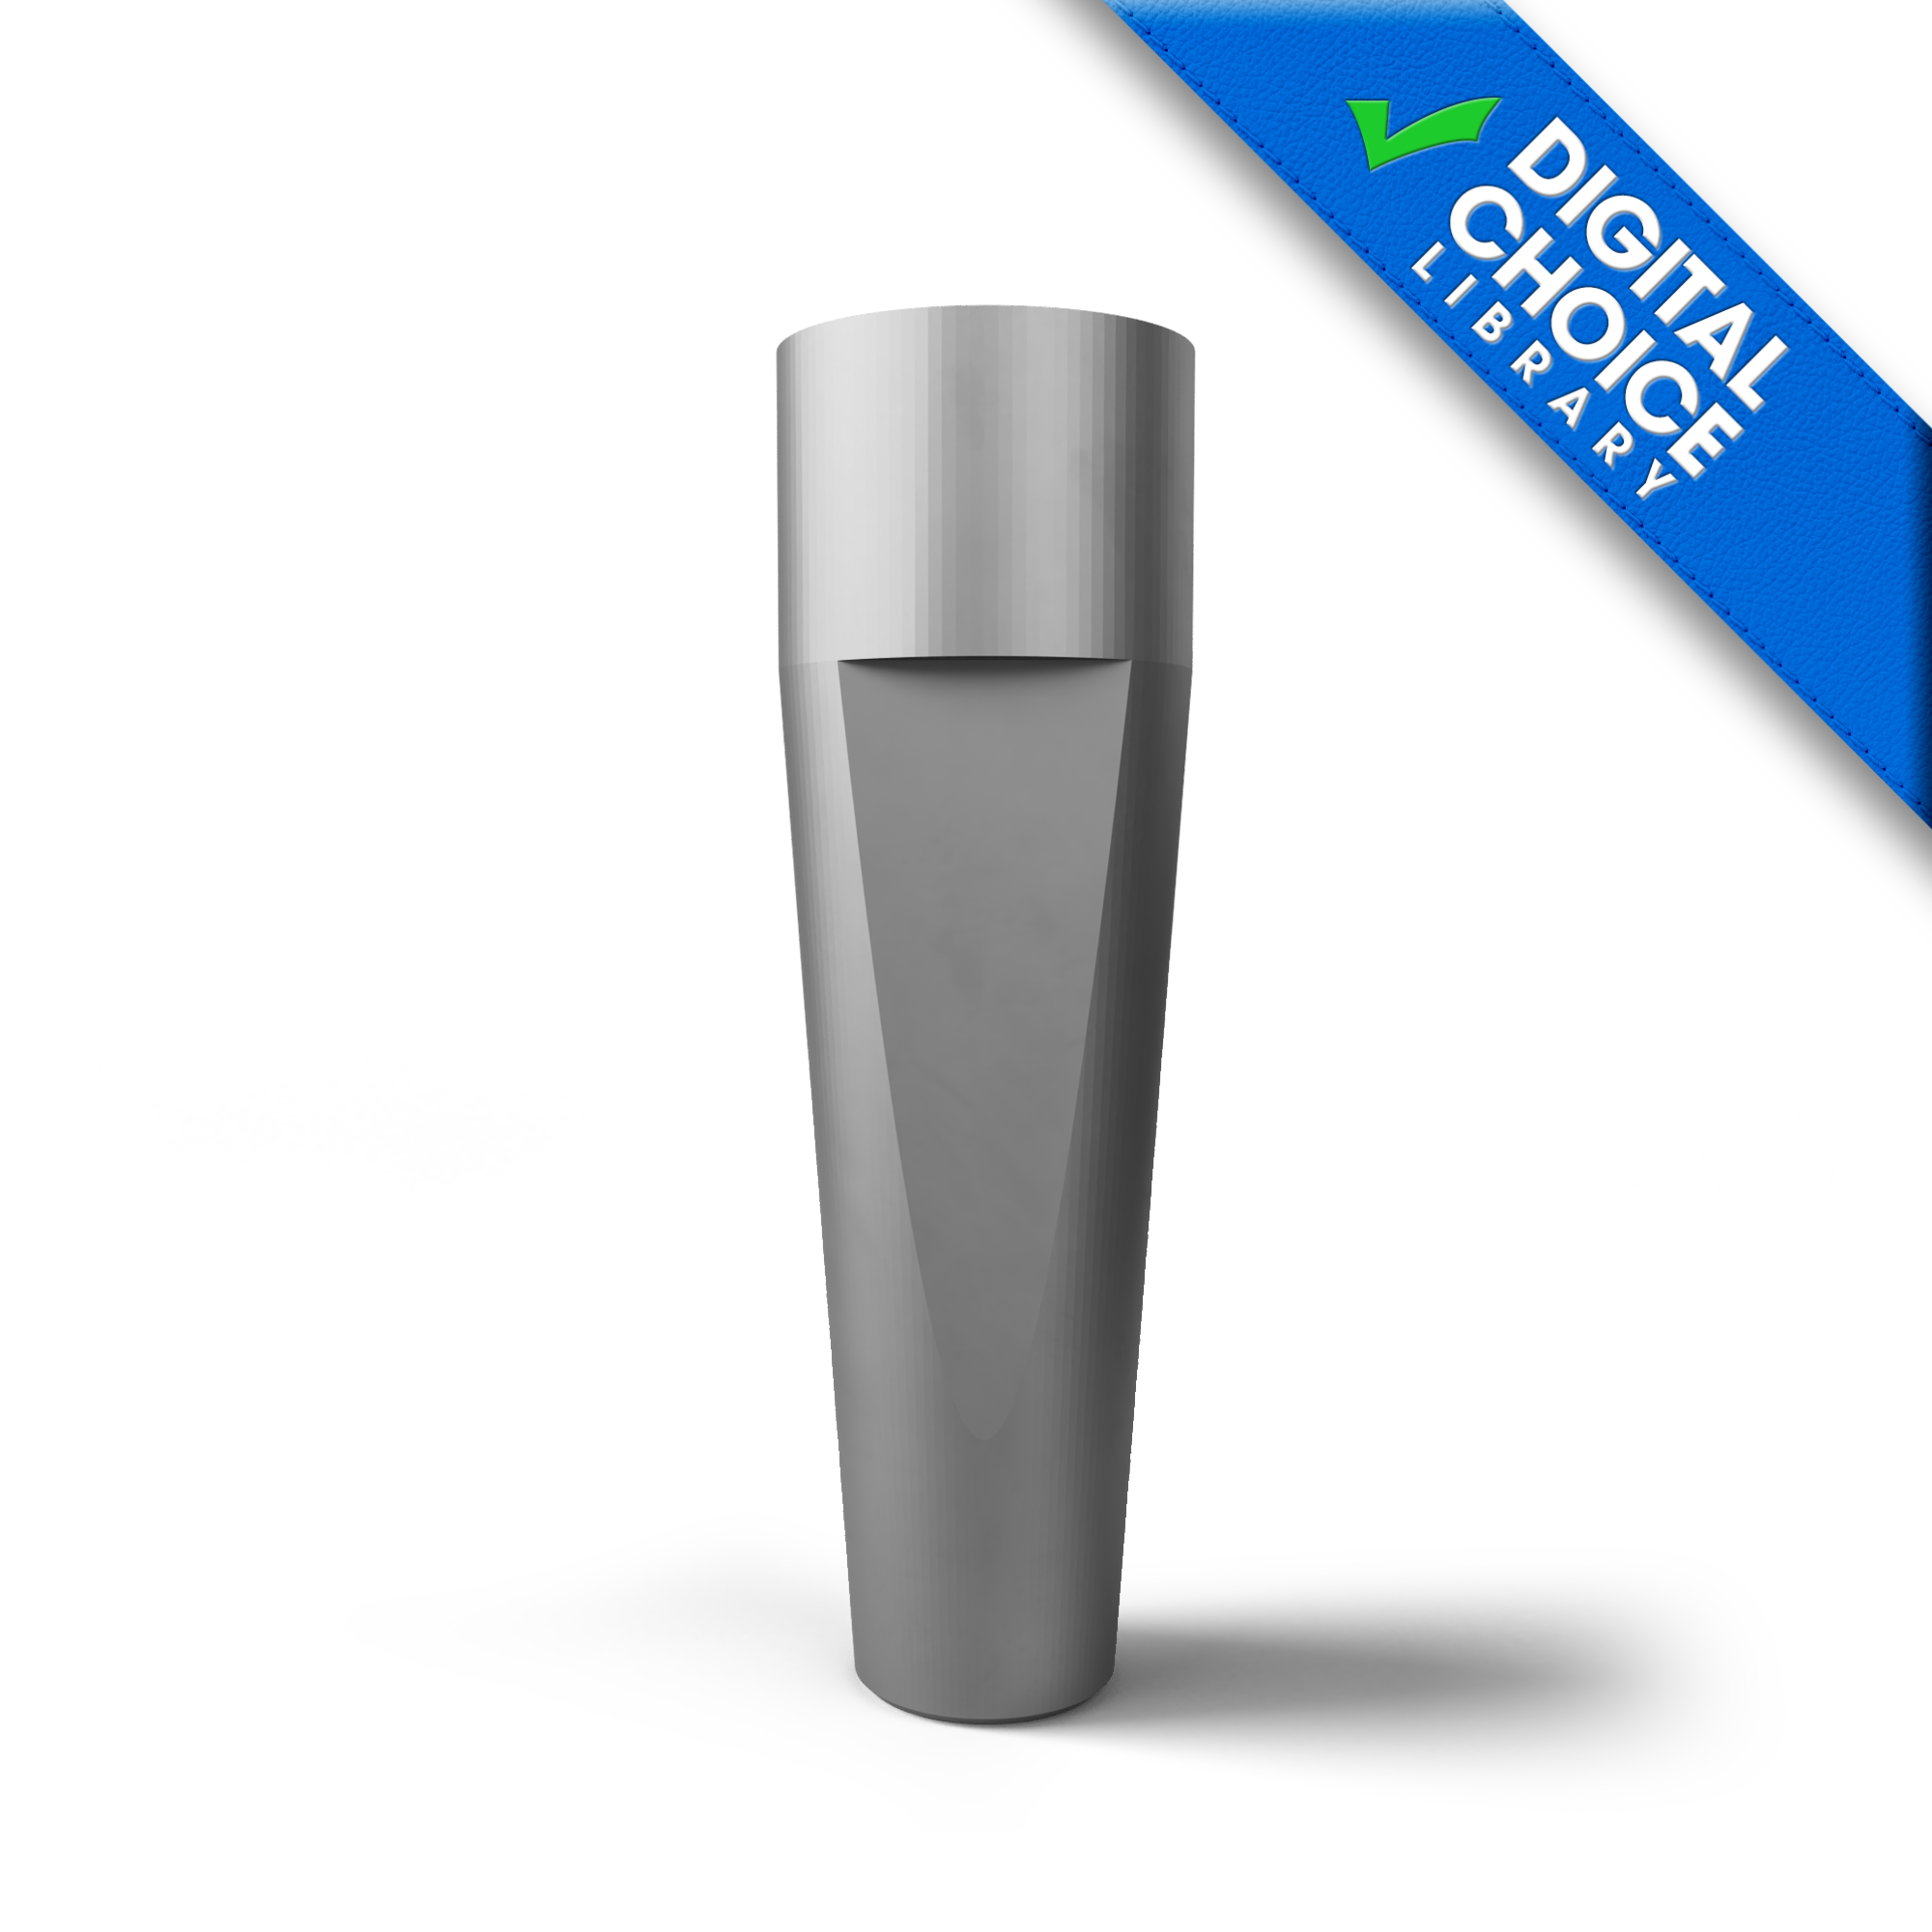 Biomet 3i Certain®-compatible 4.1mm Digital Analog